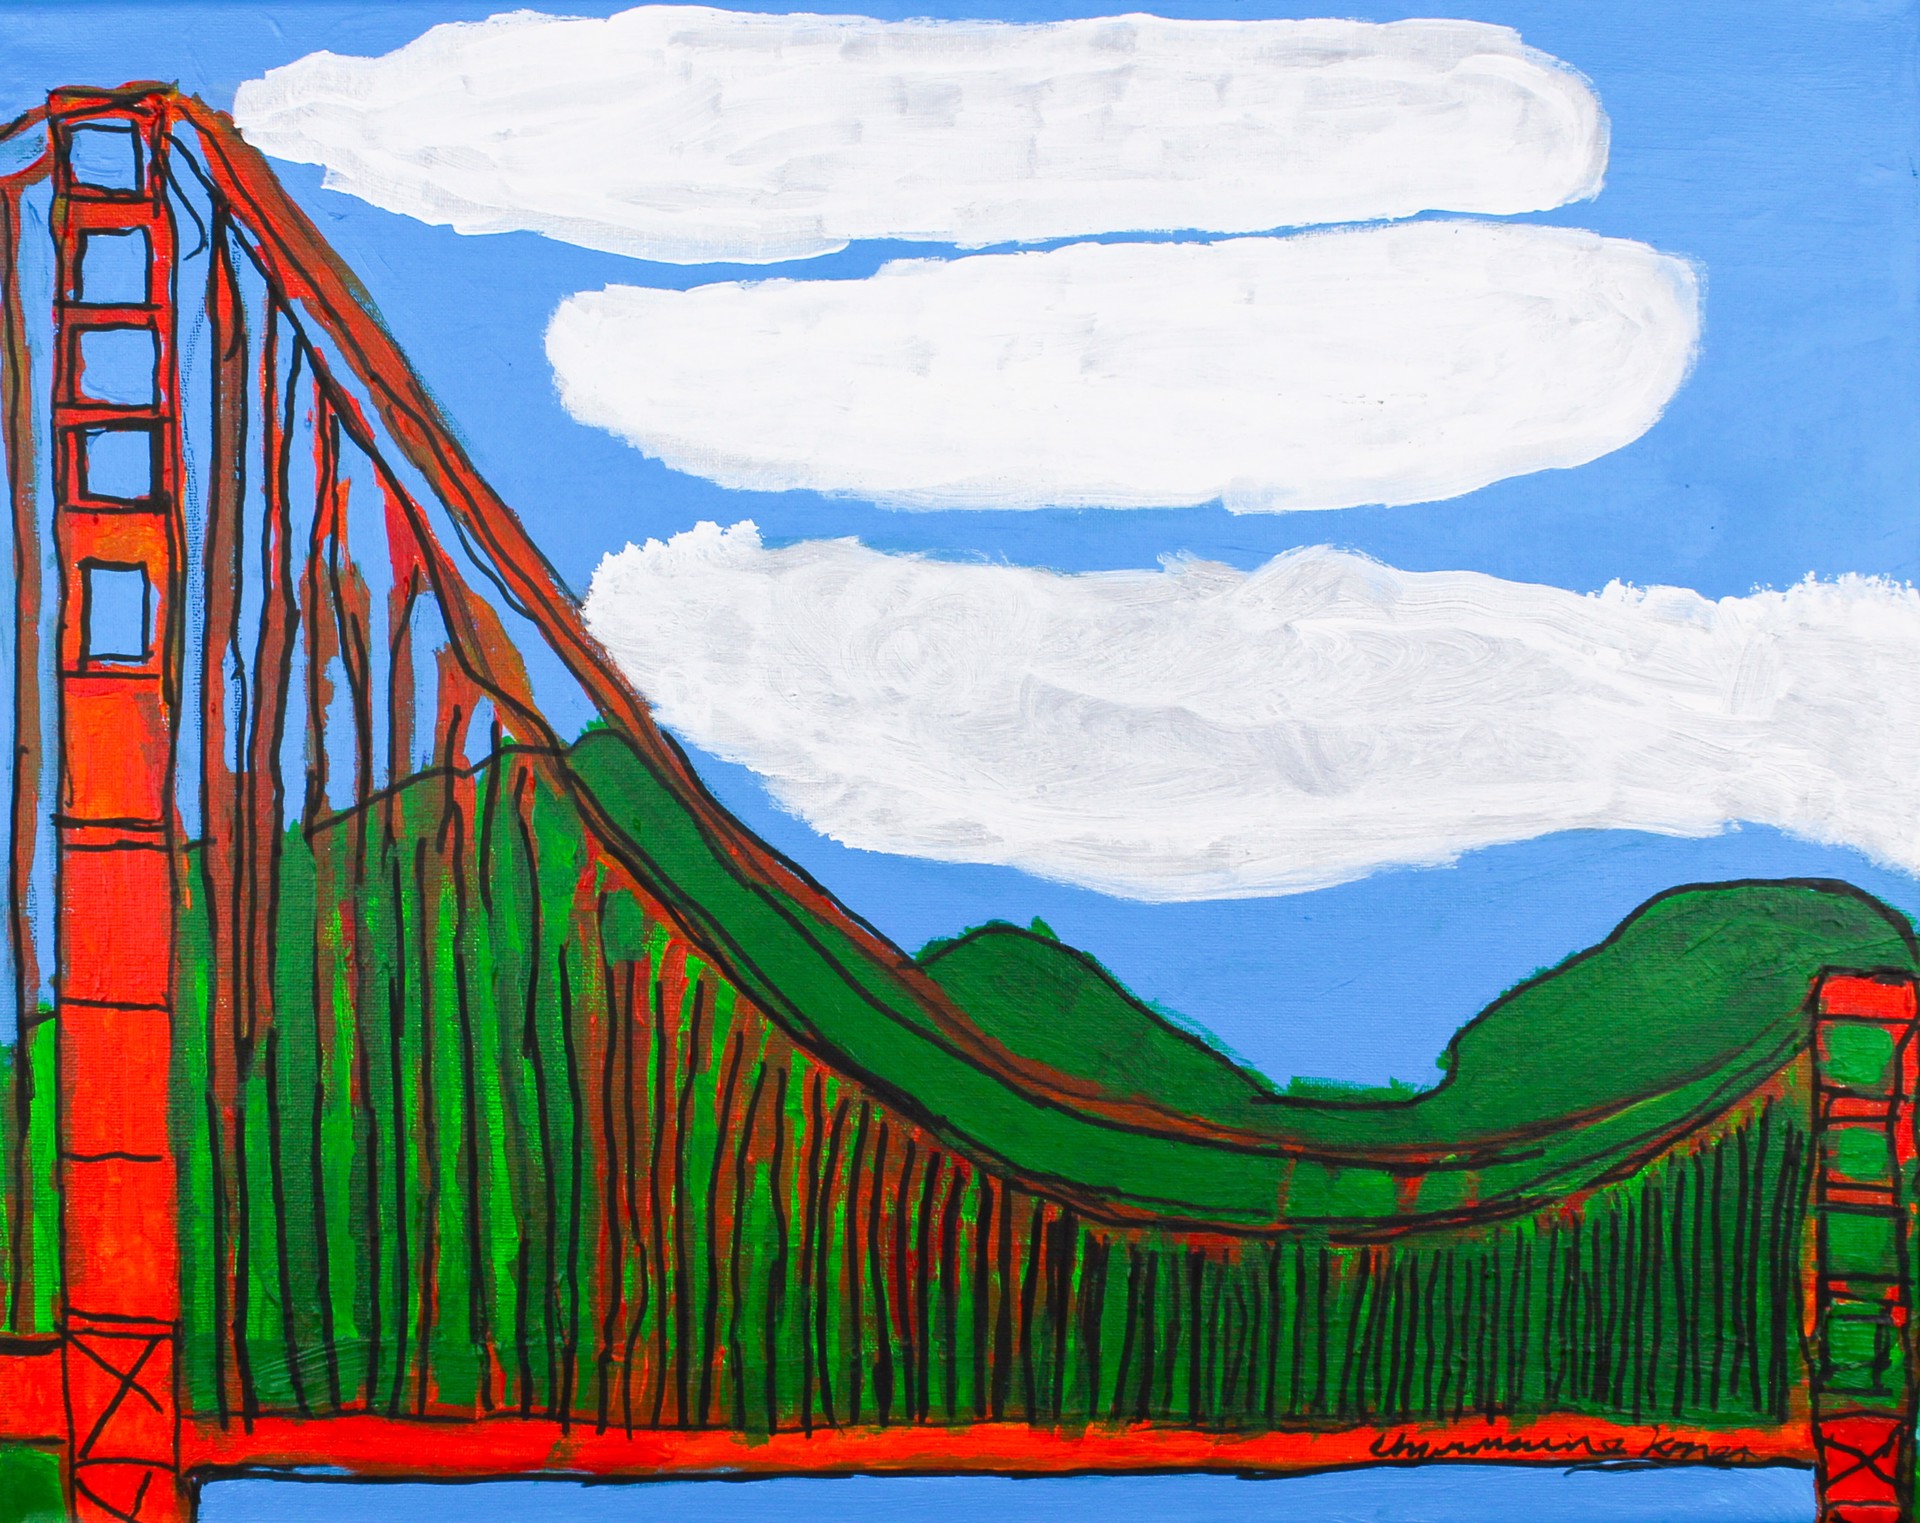 Golden Gate Bridge of San Francisco by Charmaine Jones